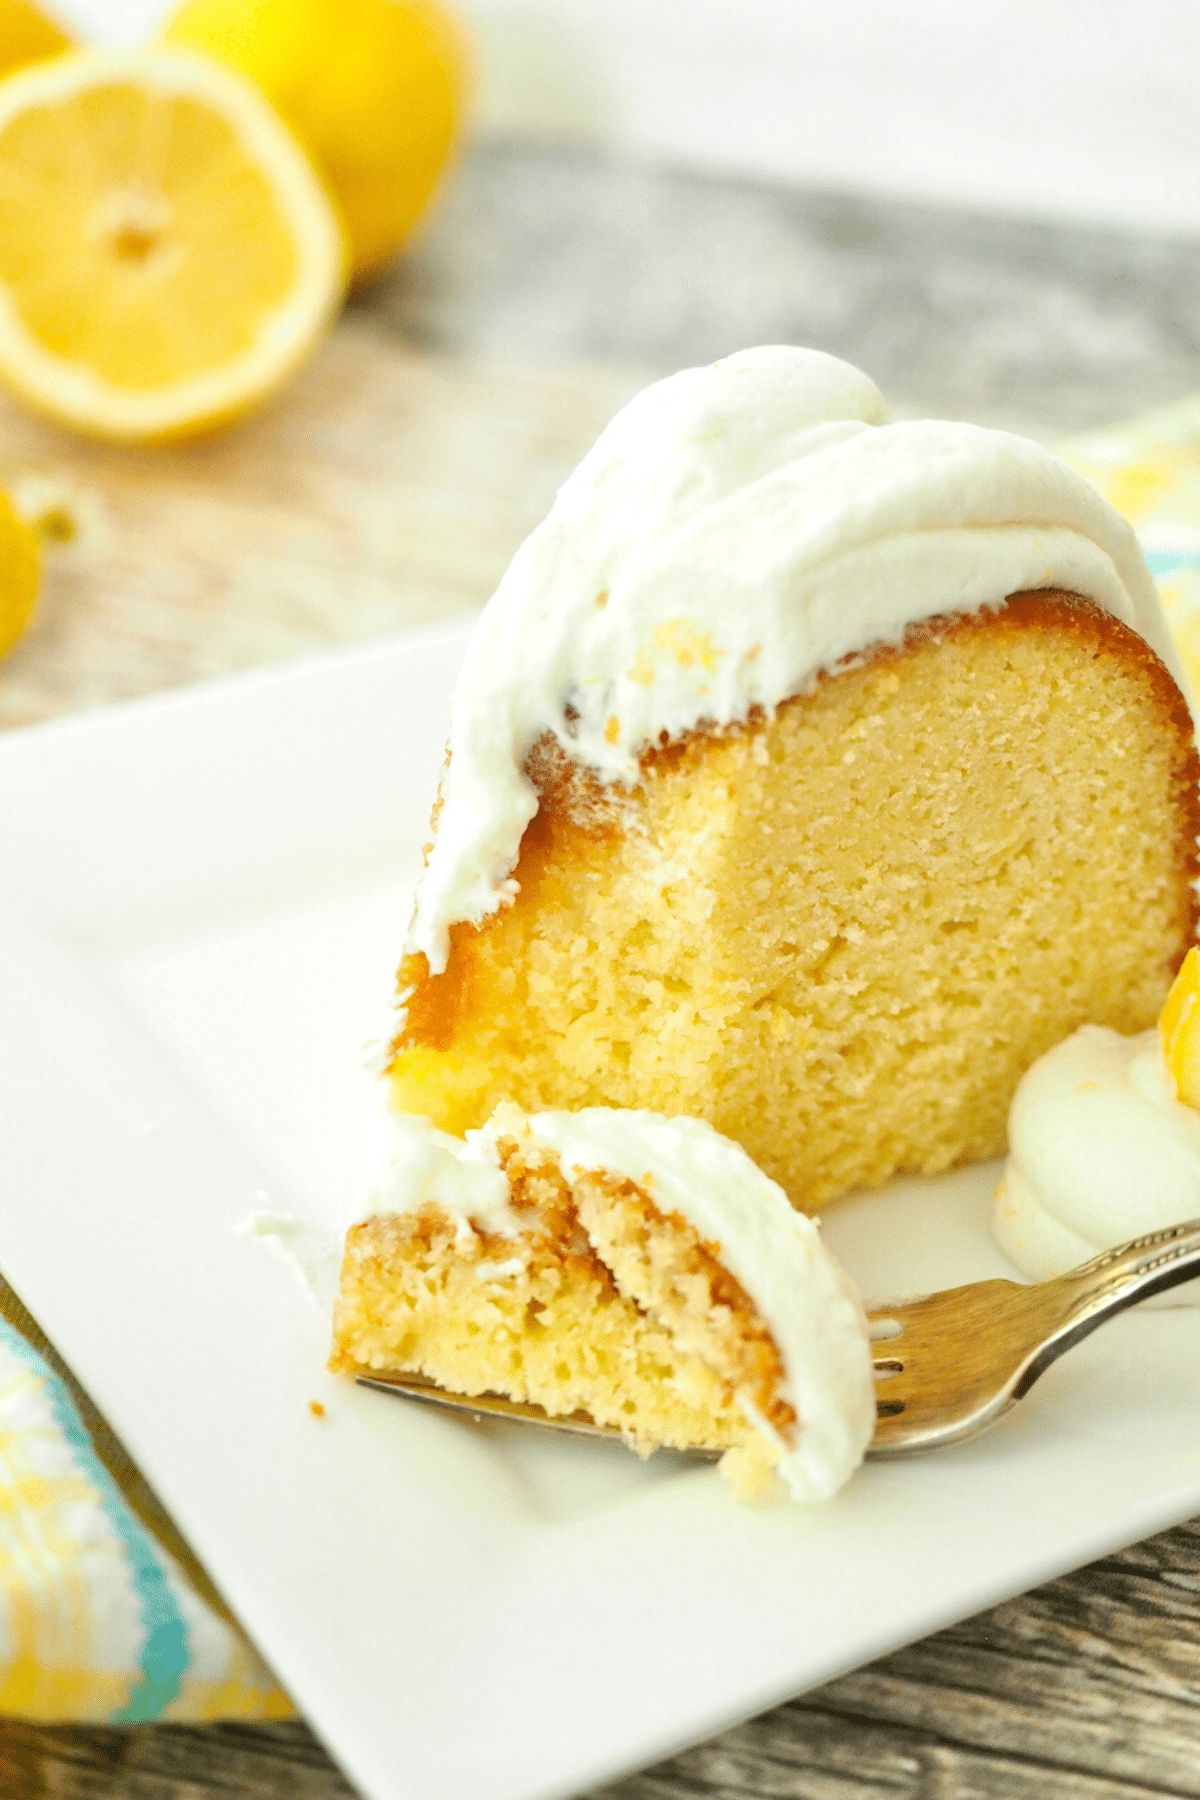 Bite on fork of lemon bundt cake with cream cheese frosting.